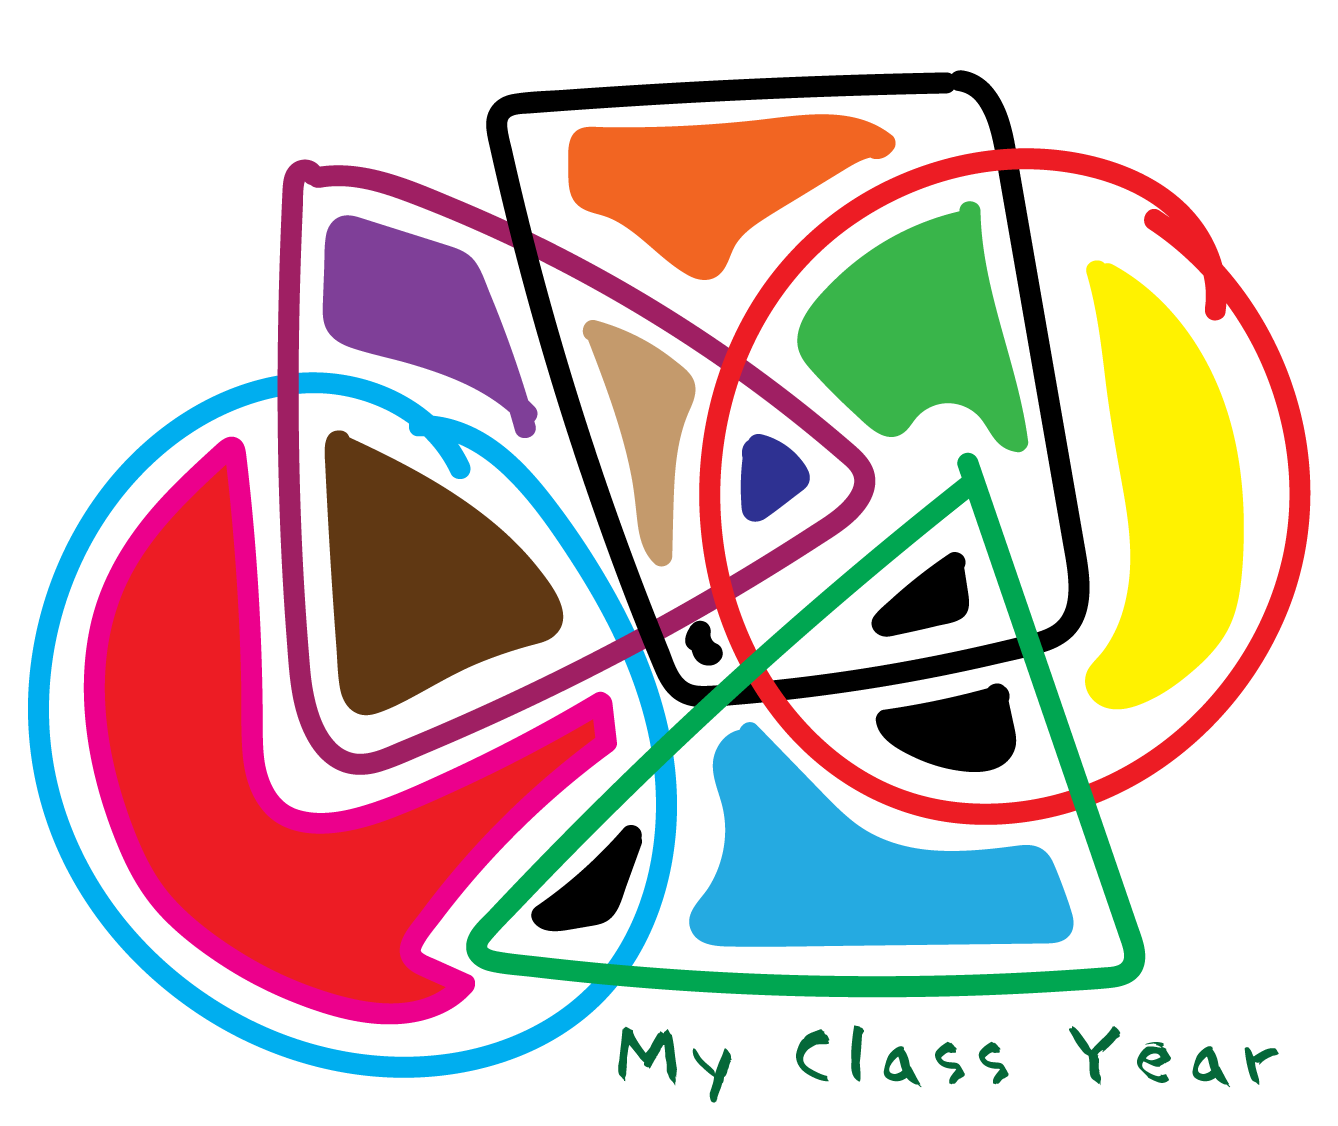 My Class Year